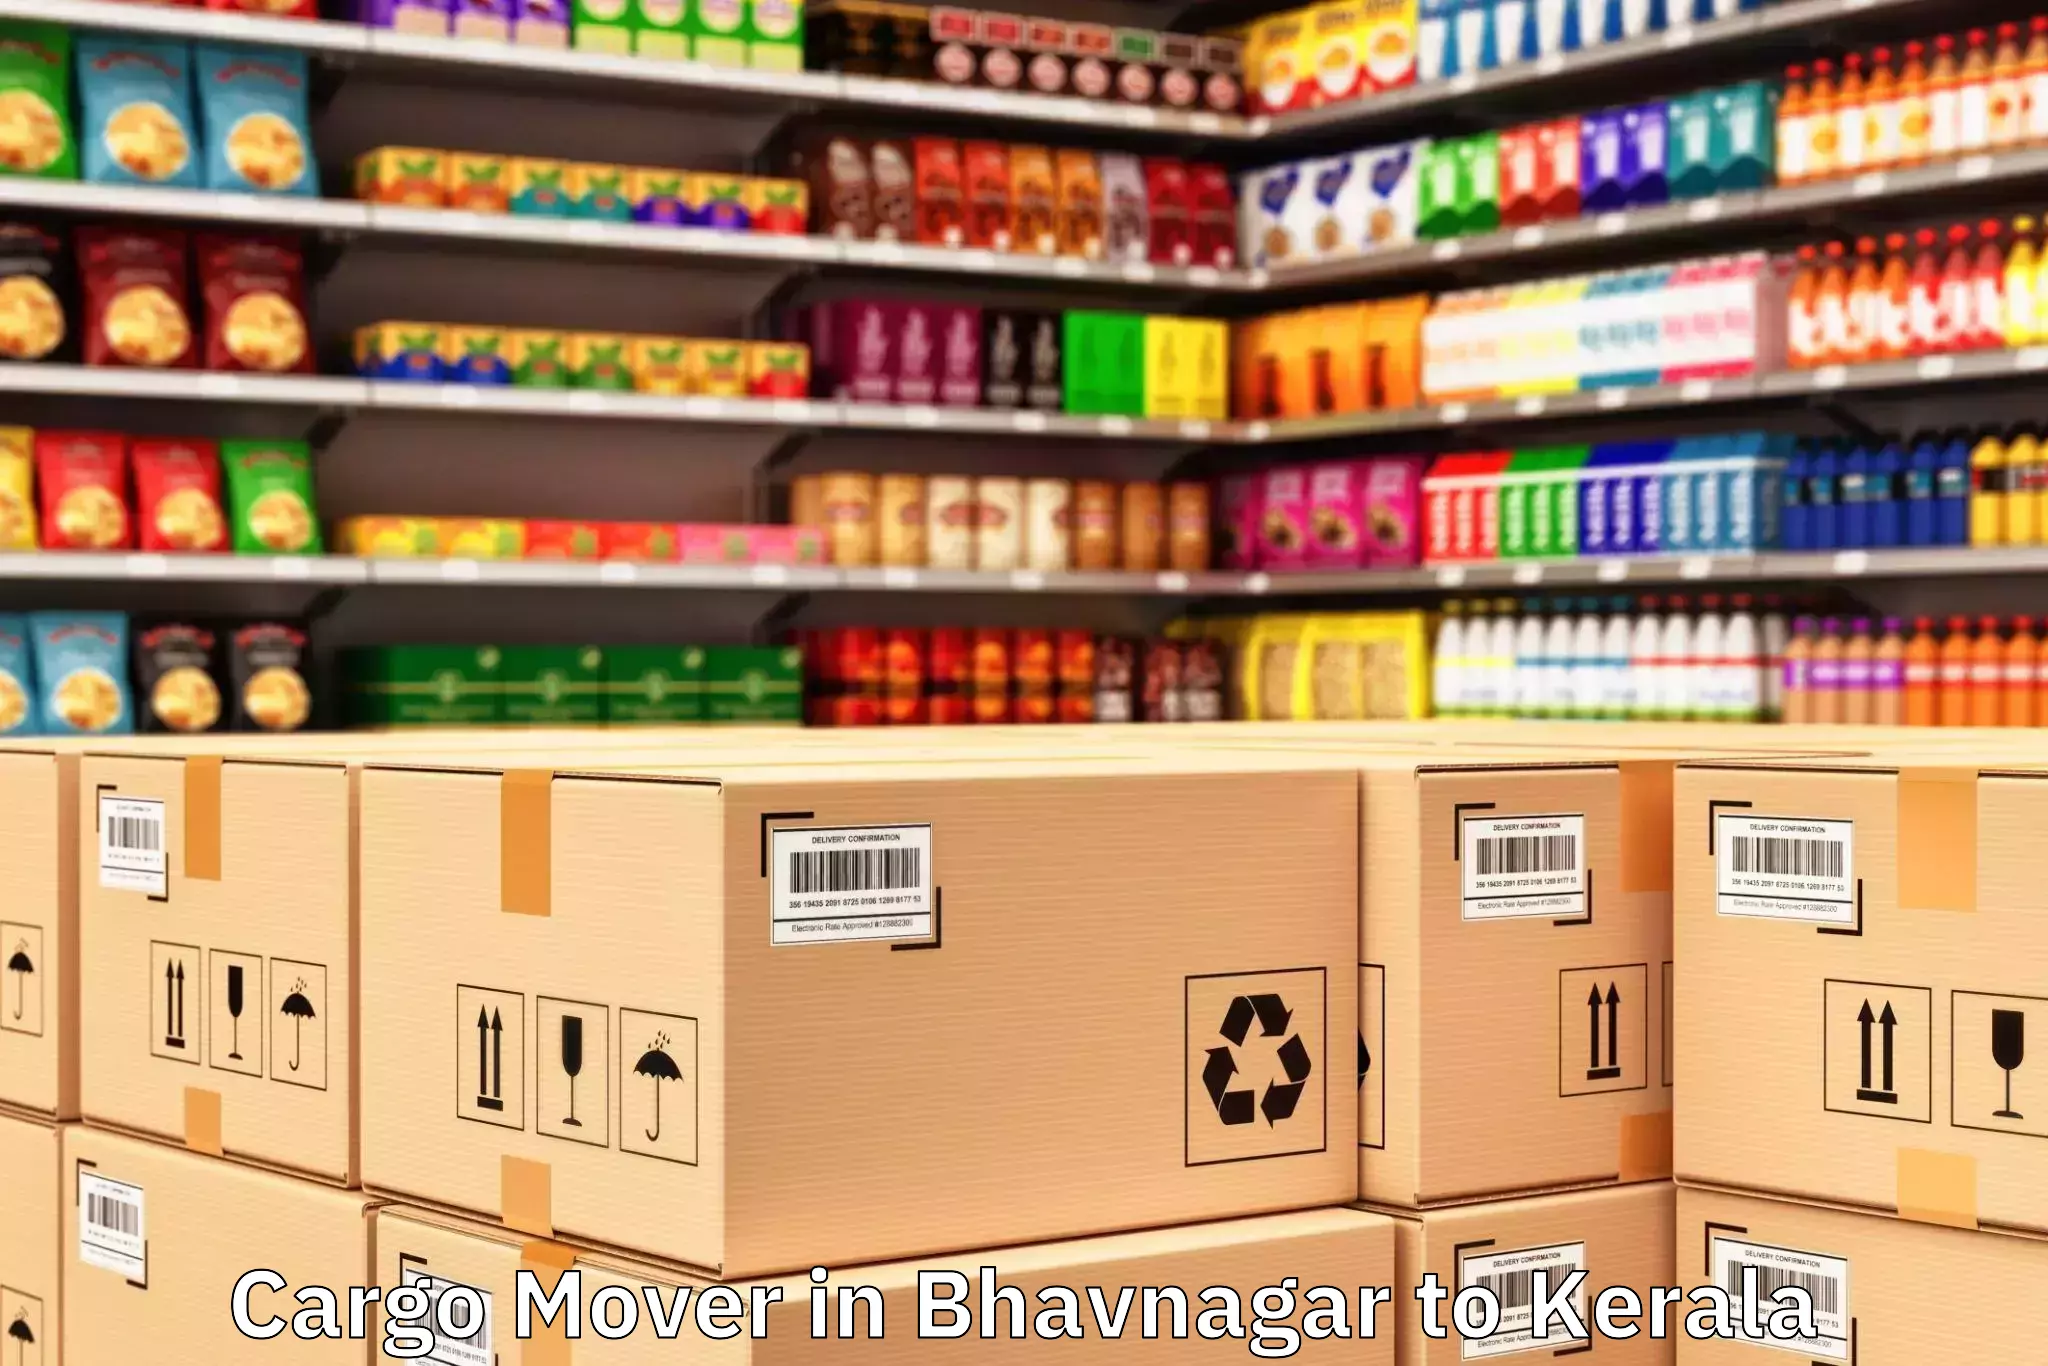 Bhavnagar to Kerala University Thiruvananthapuram Cargo Mover Booking